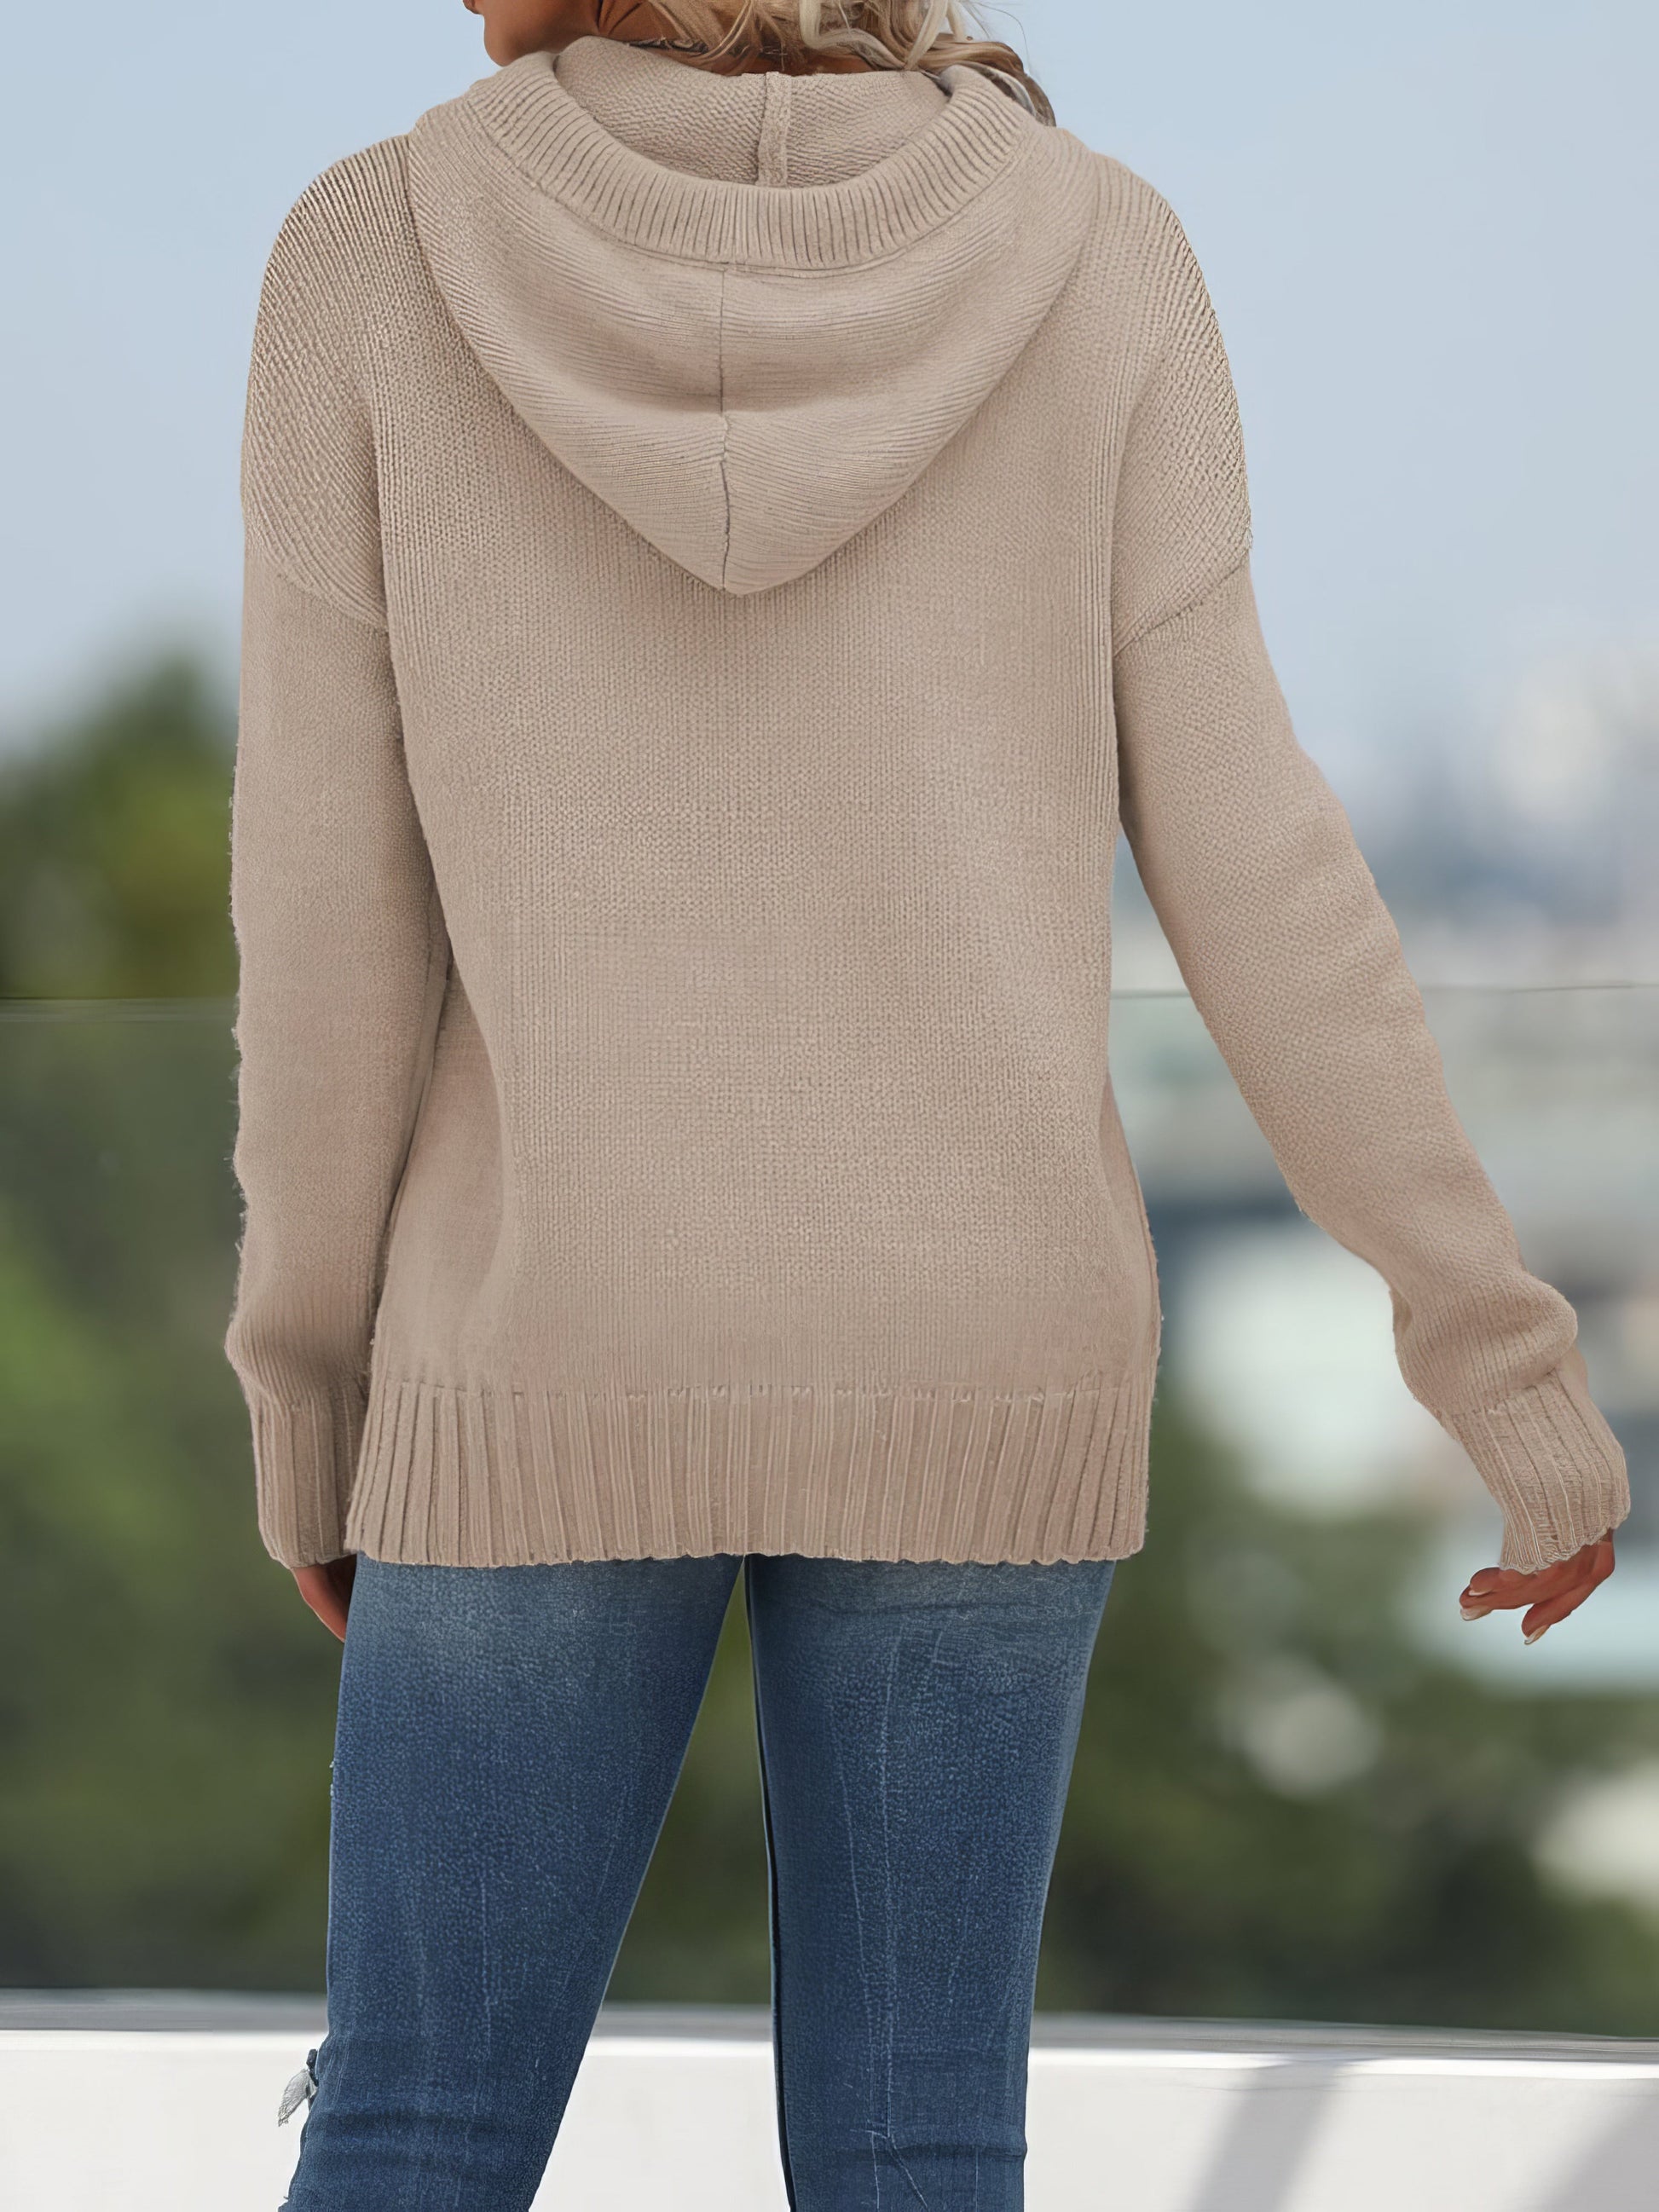 Sweaters - Solid Pocket Knit Hooded Sweater - MsDressly